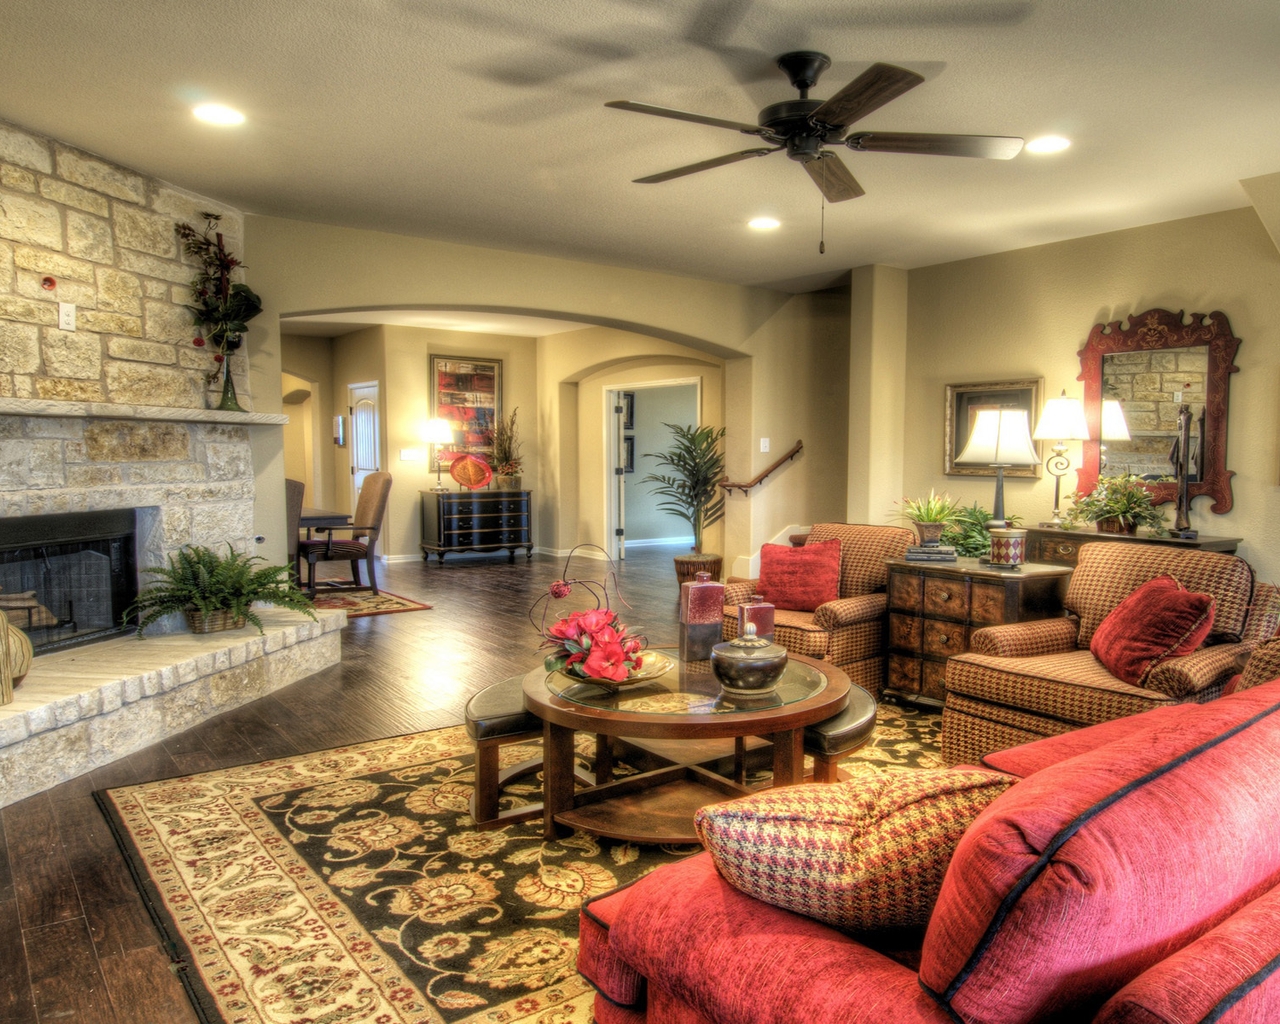 Image: Living room, fireplace, stone, floor, carpet, table, plants, flowers, mirror, vase, chair, sofa, pillows, dresser, lamp